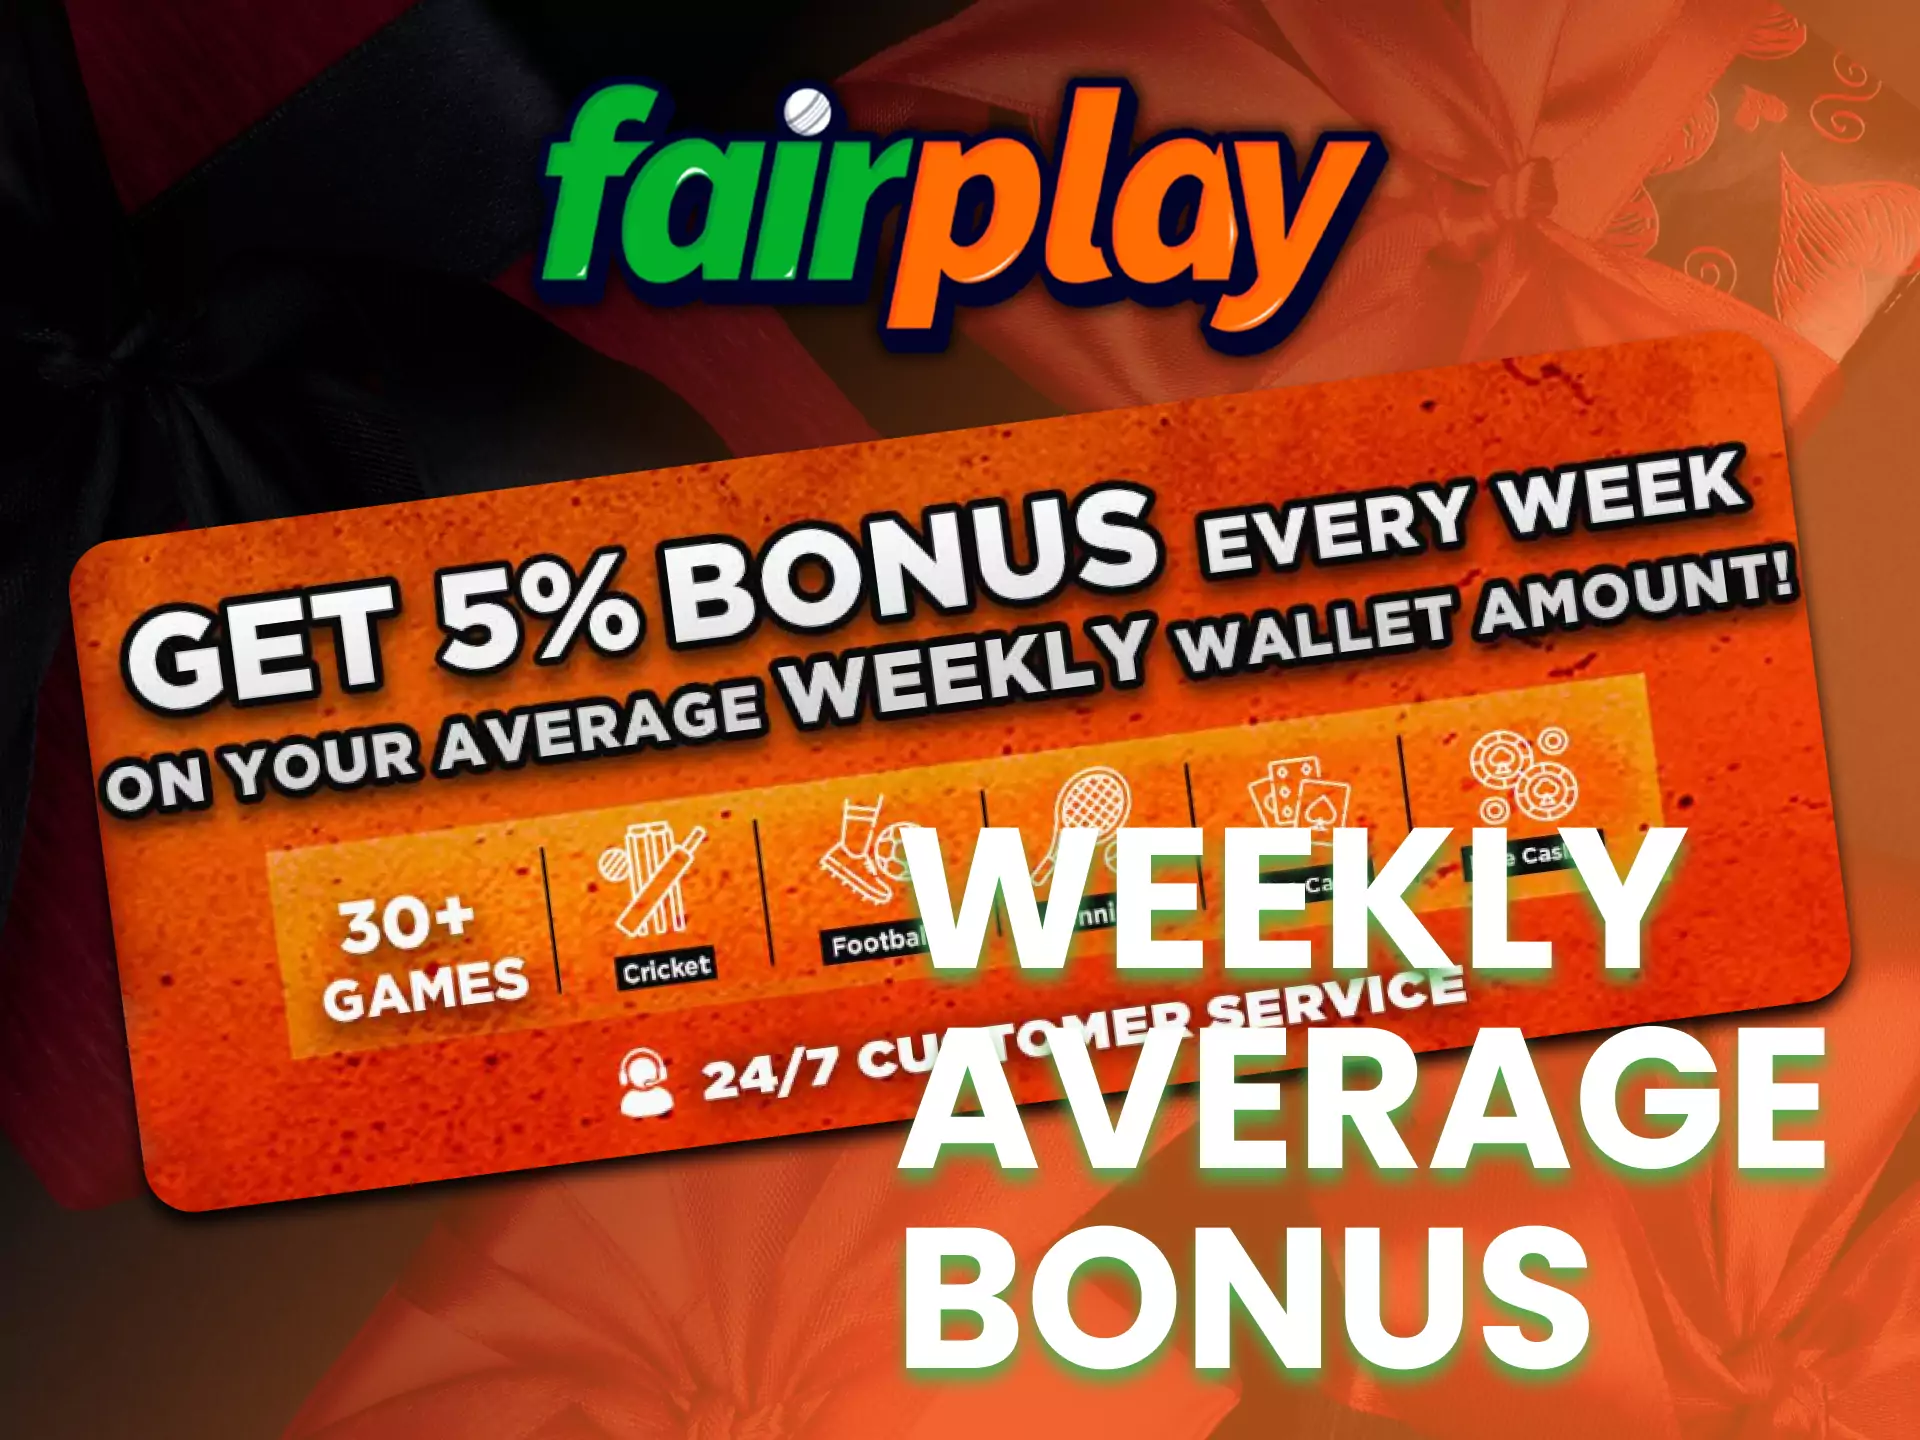 On Fairplay, get a weekly bonus of 5% average.